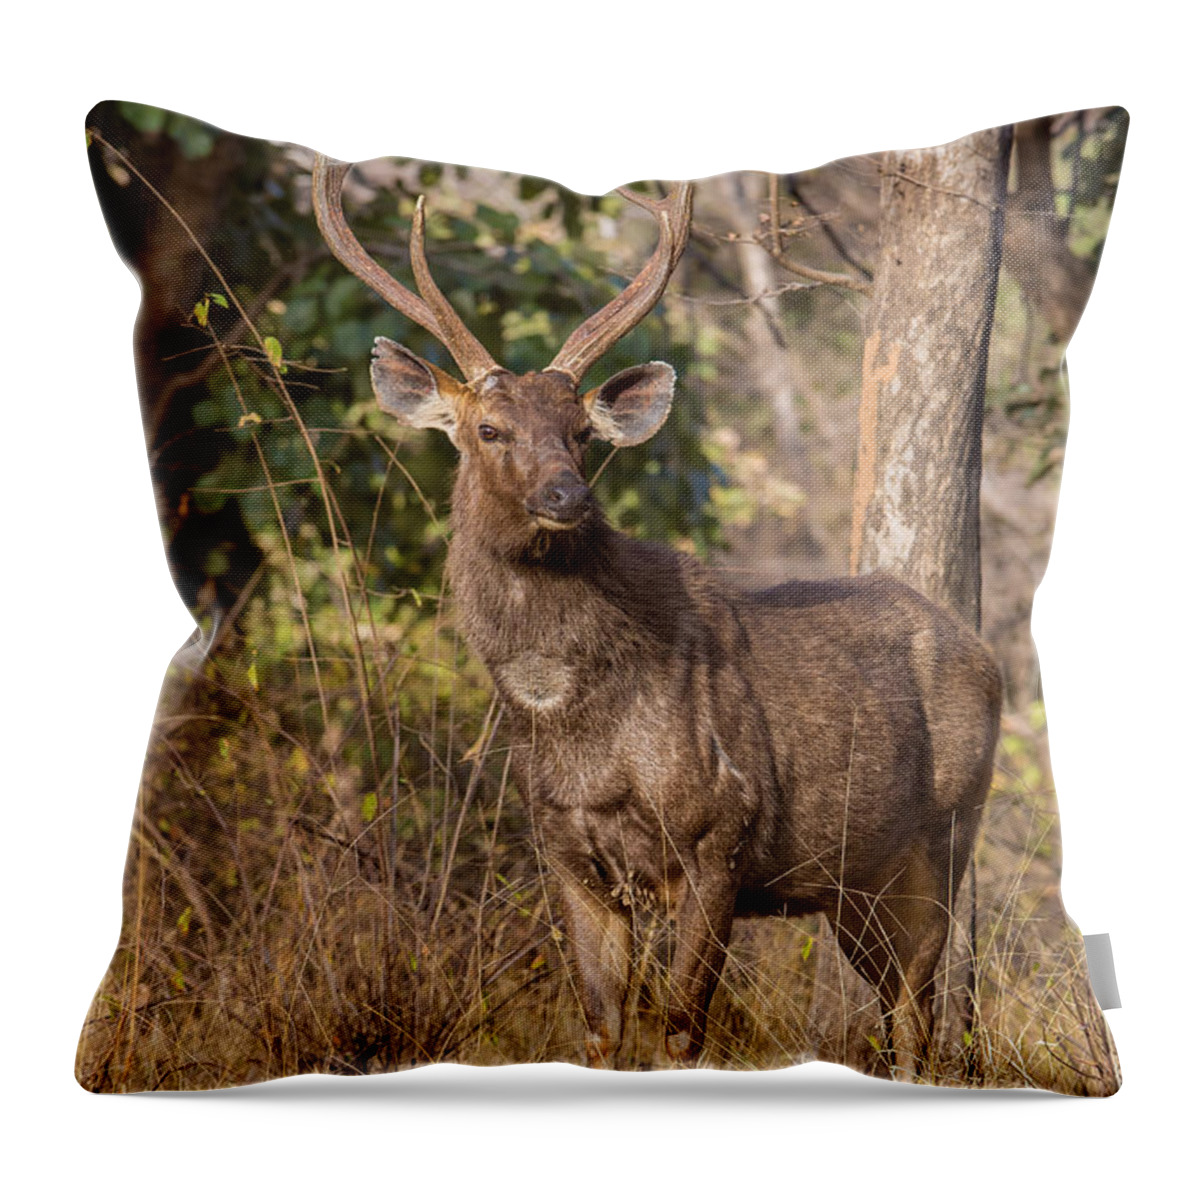 Sambar Deer Throw Pillow featuring the photograph Sambar Deer, India #1 by B. G. Thomson